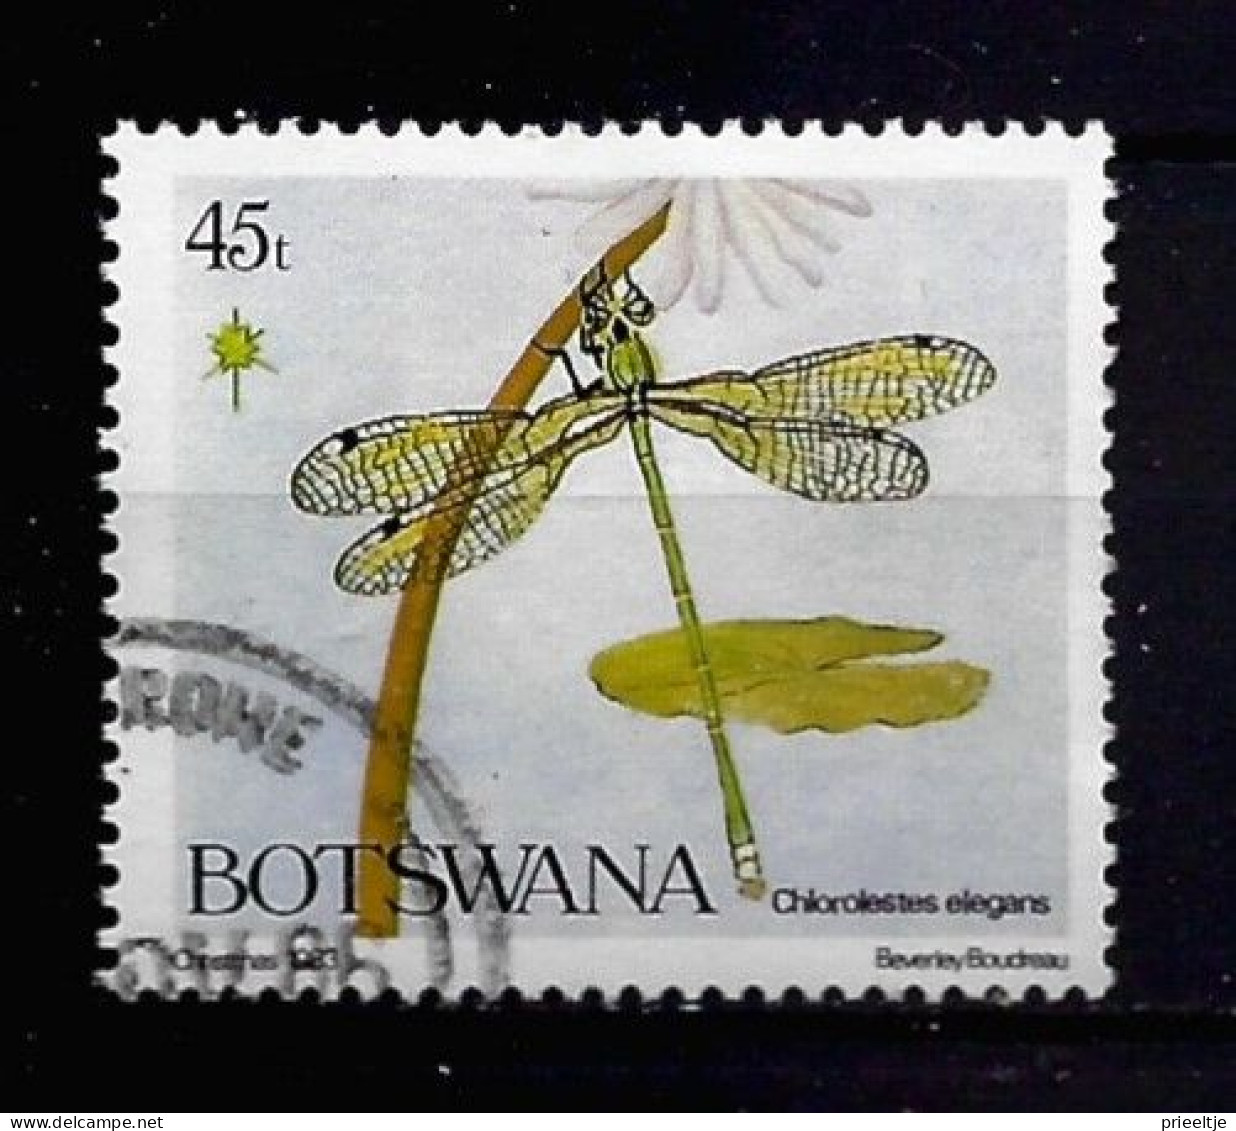 Botswana 1983 Insect Y.T. 488 (0) - Botswana (1966-...)